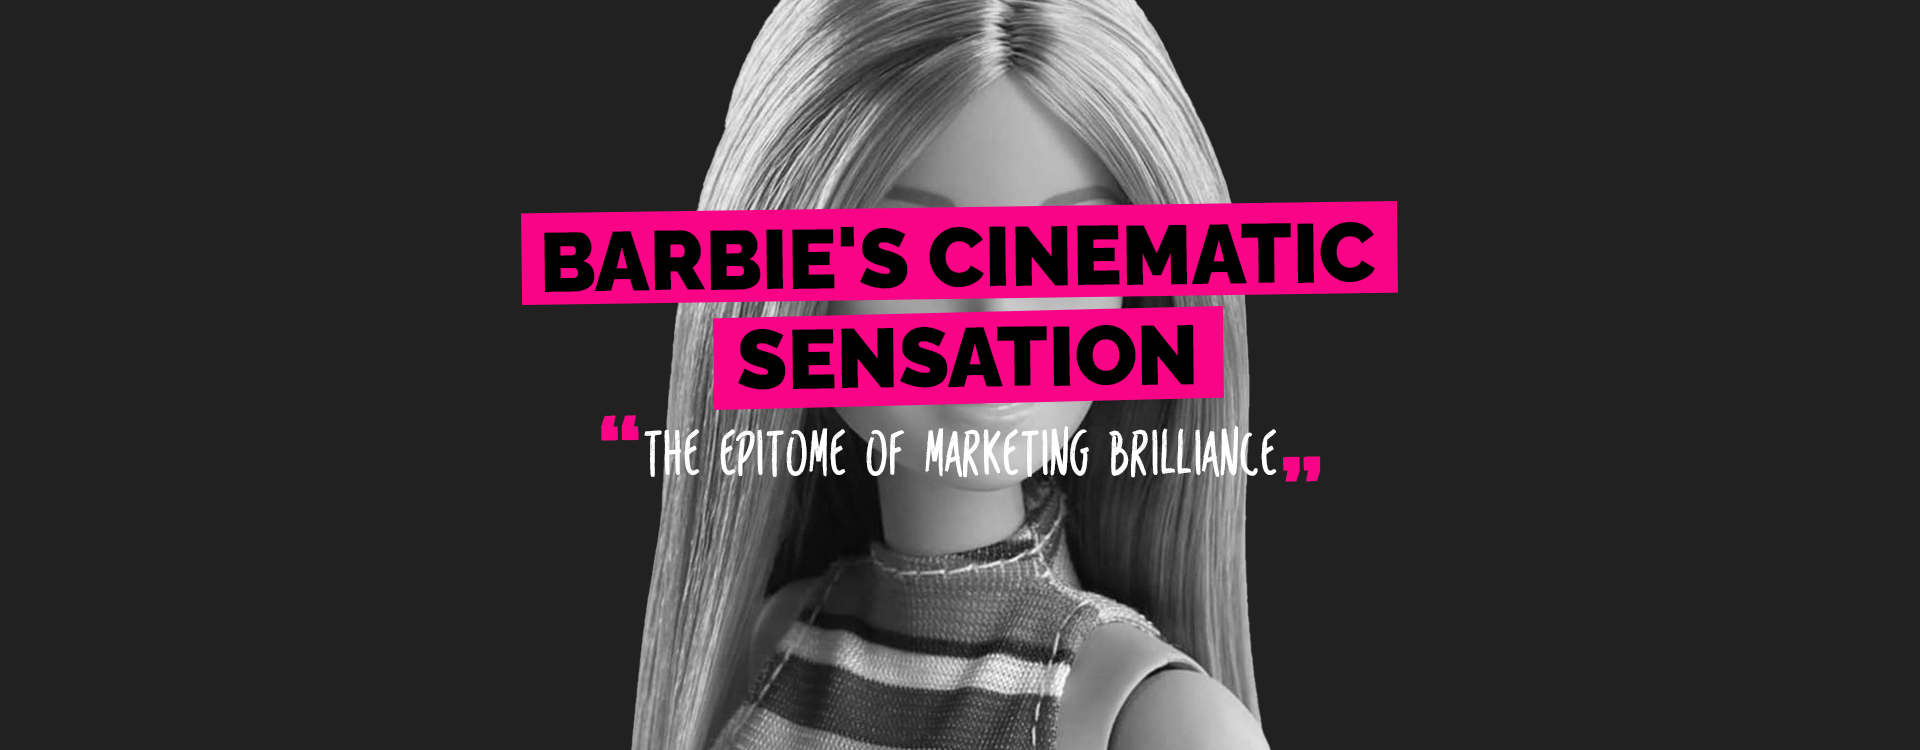 Barbie’s Cinematic Sensation: The Epitome of Marketing Brilliance